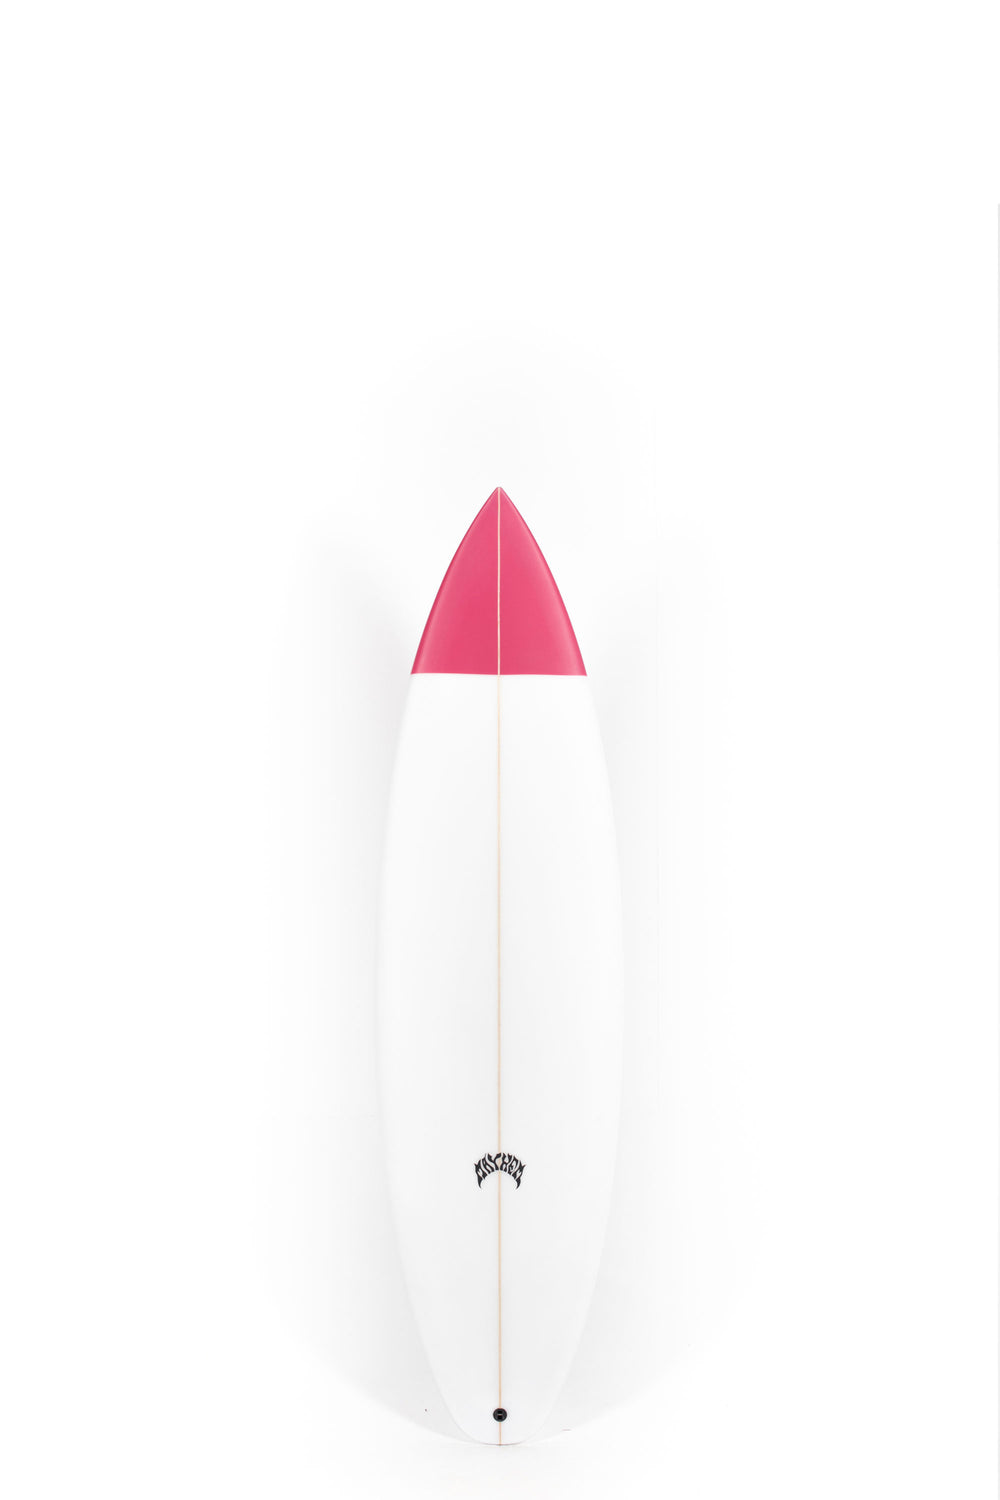 Pukas Surf Shop - Lost Surfboards - DRIVER 3.0 by Matt Biolos - 6'1